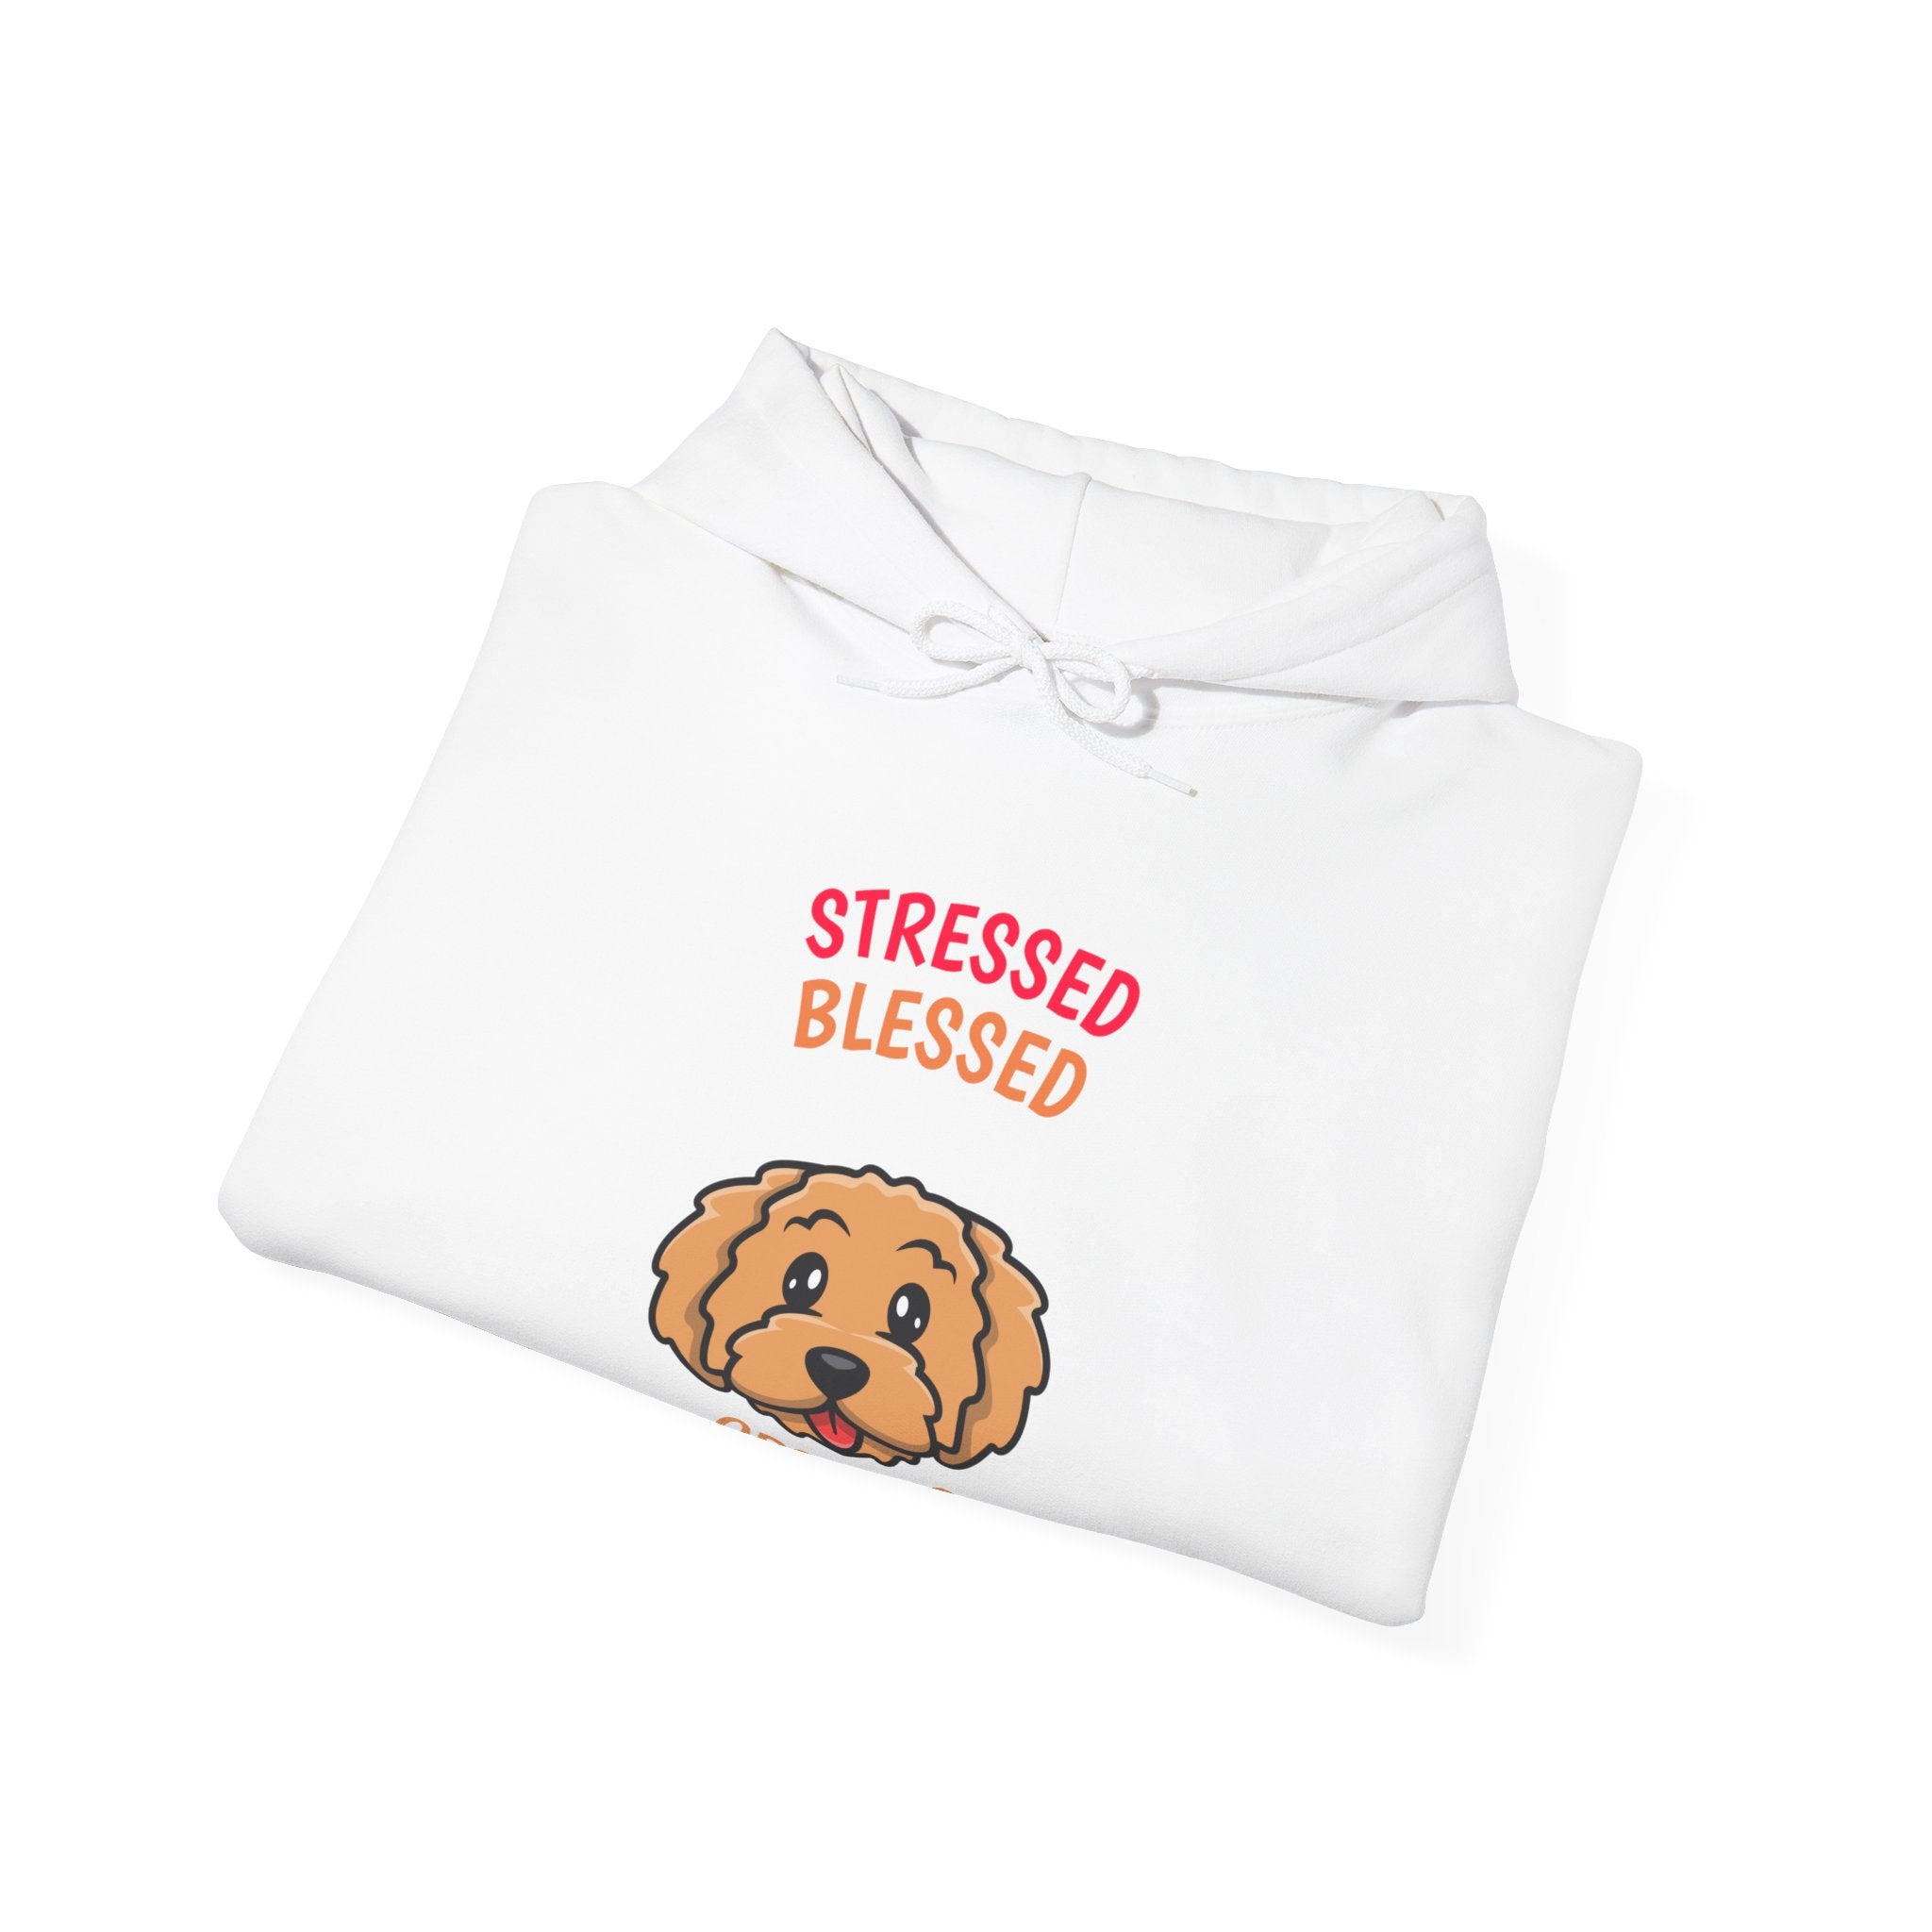 Poodle Obsessed - Hooded Sweatshirt